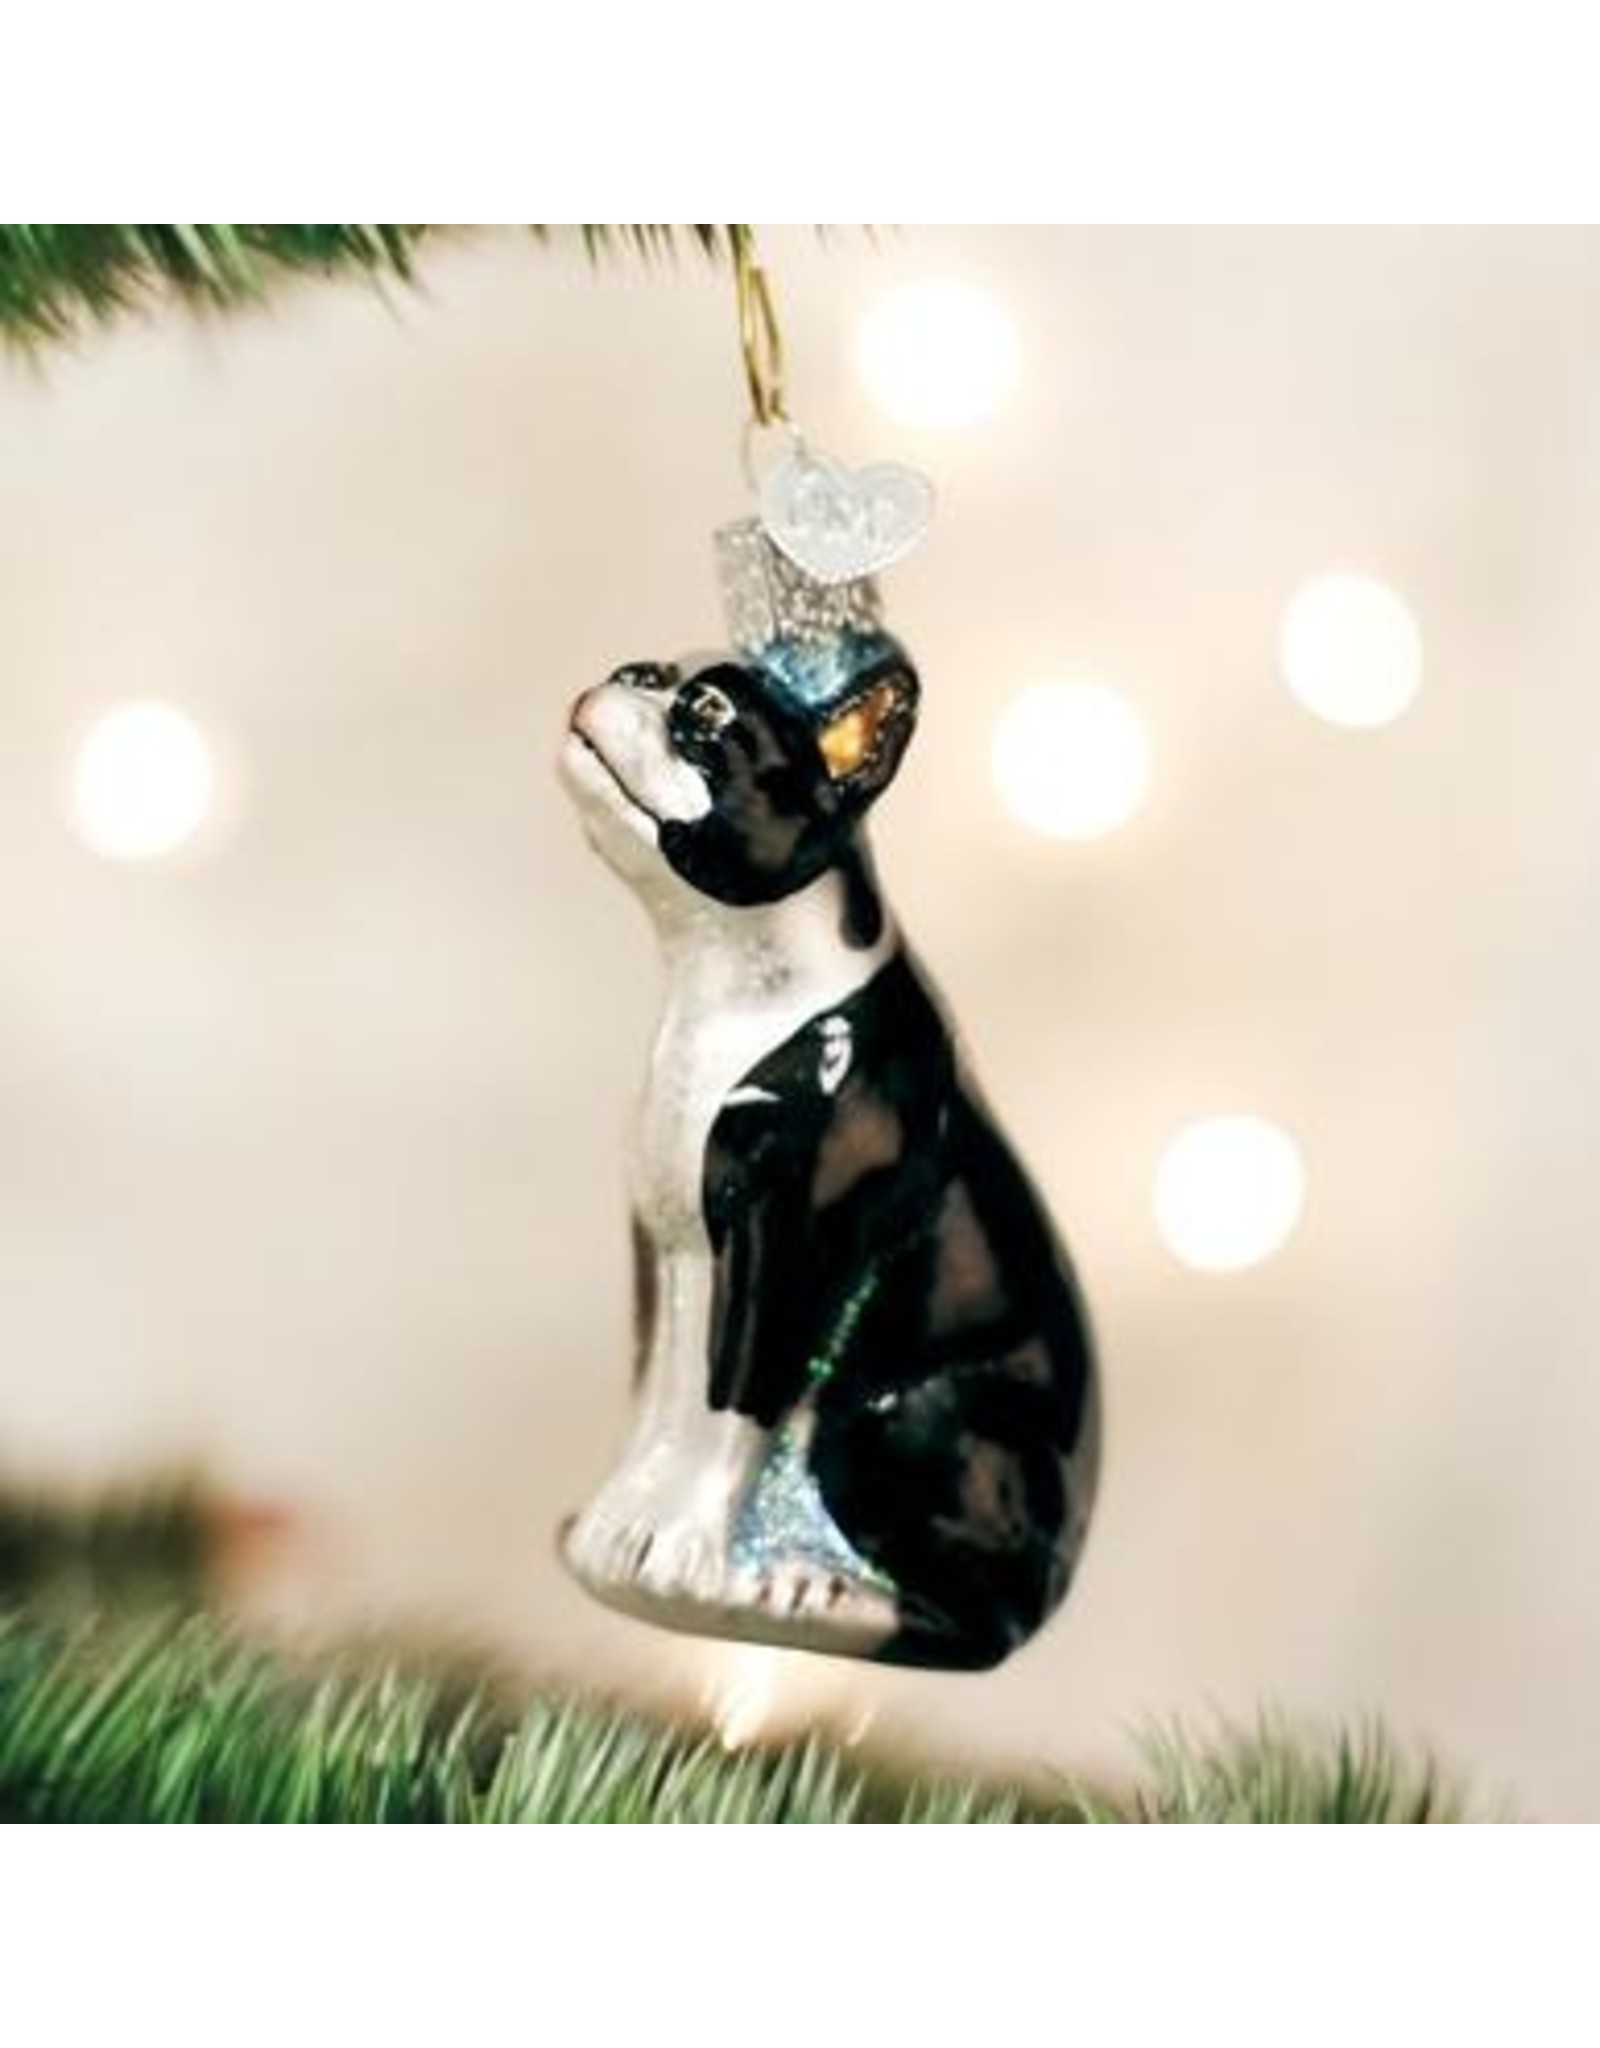 Old World Christmas Boston Terrier Ornament